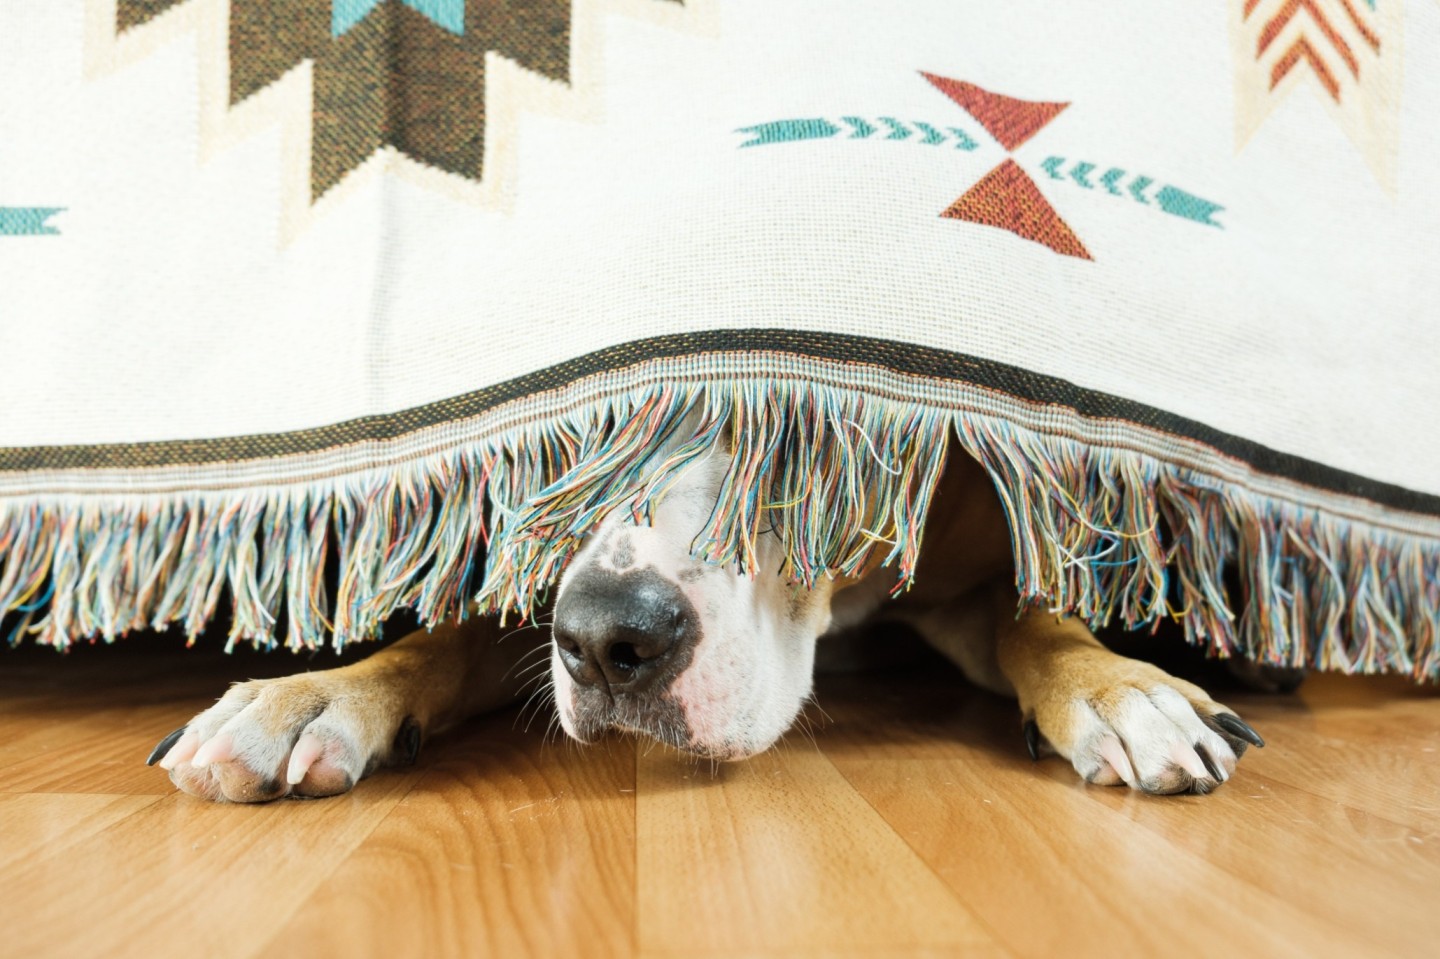 A dog hiding under a bed